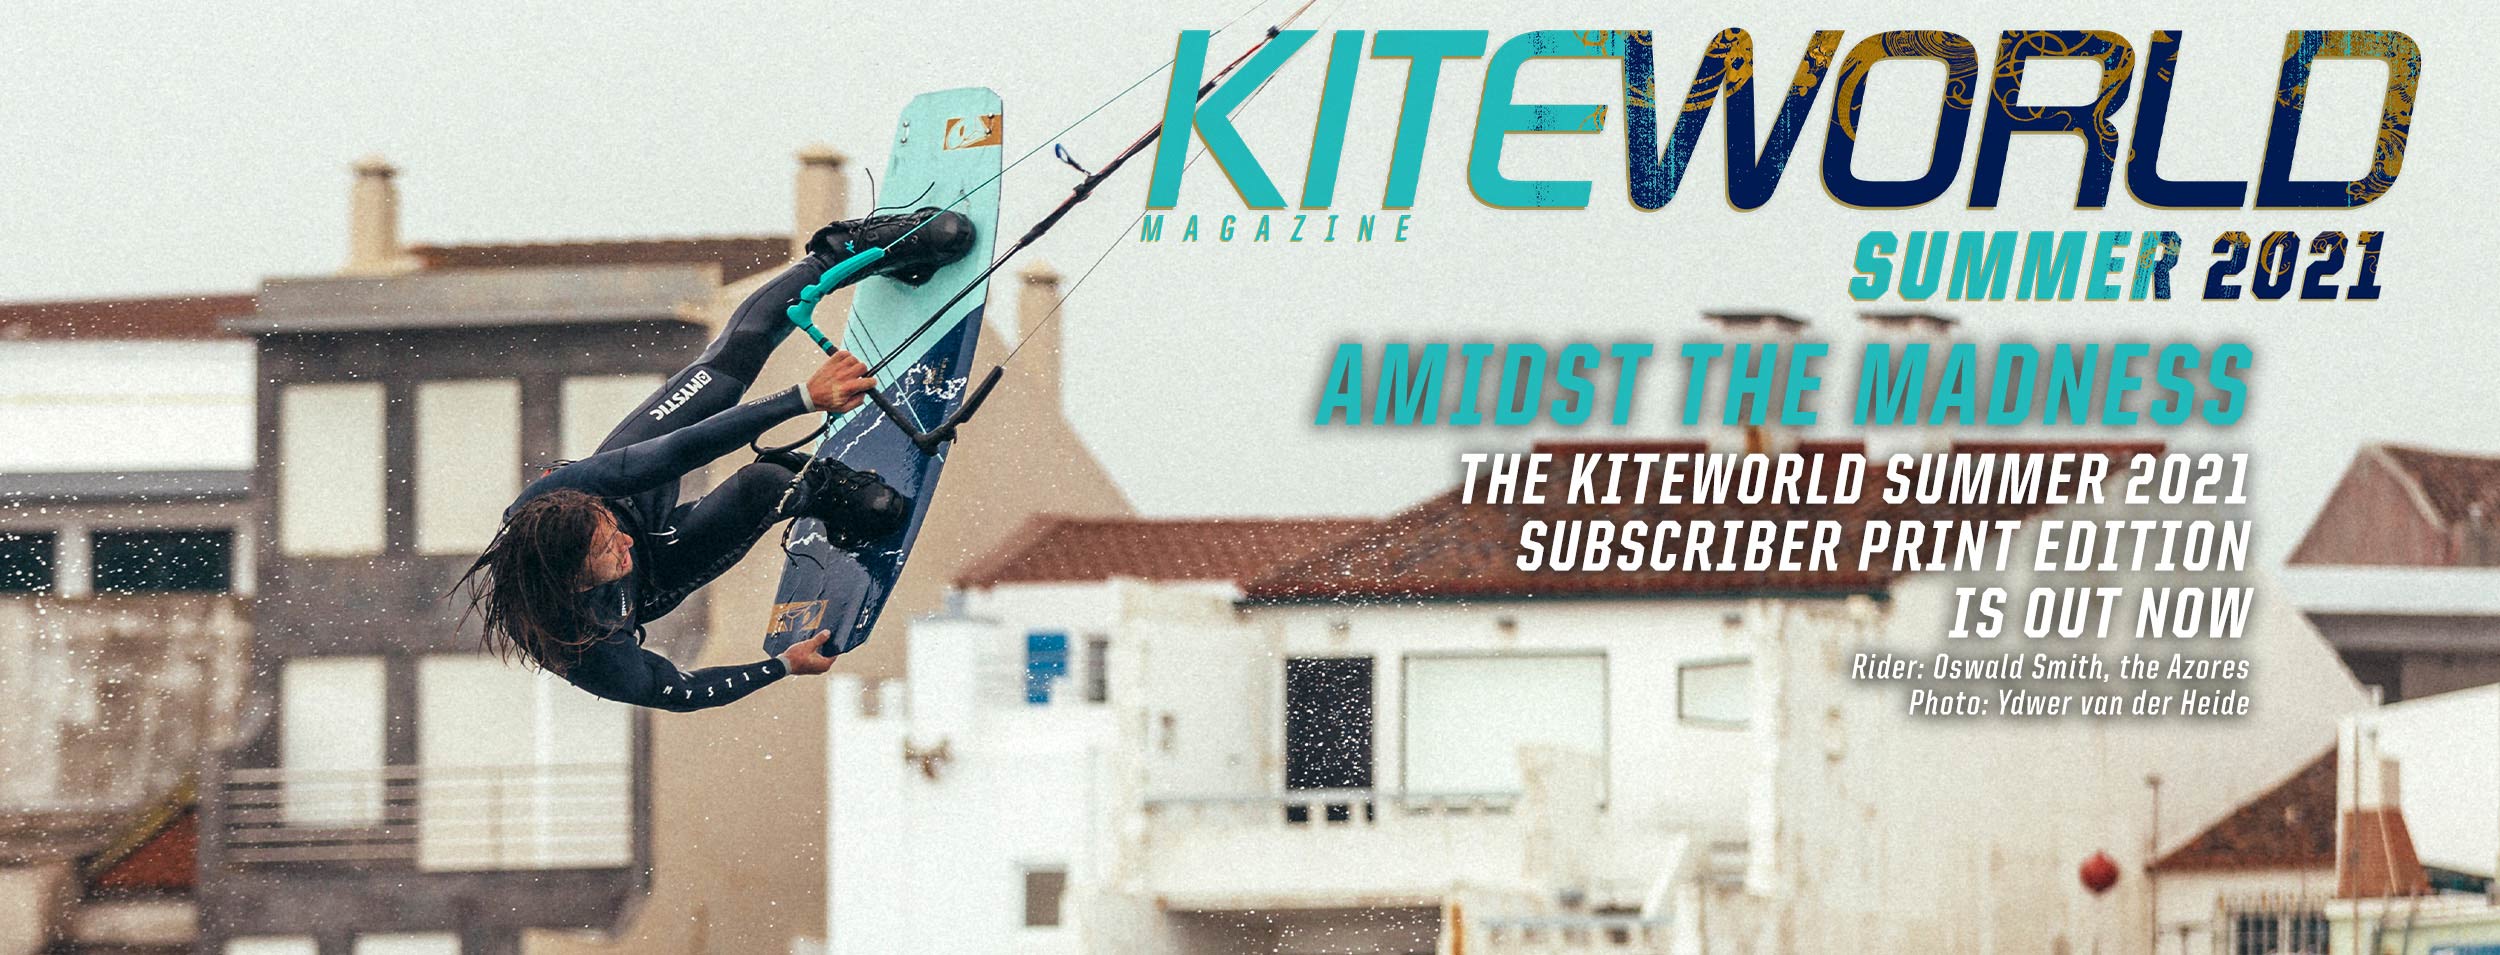 Kiteworld summer issue 2021